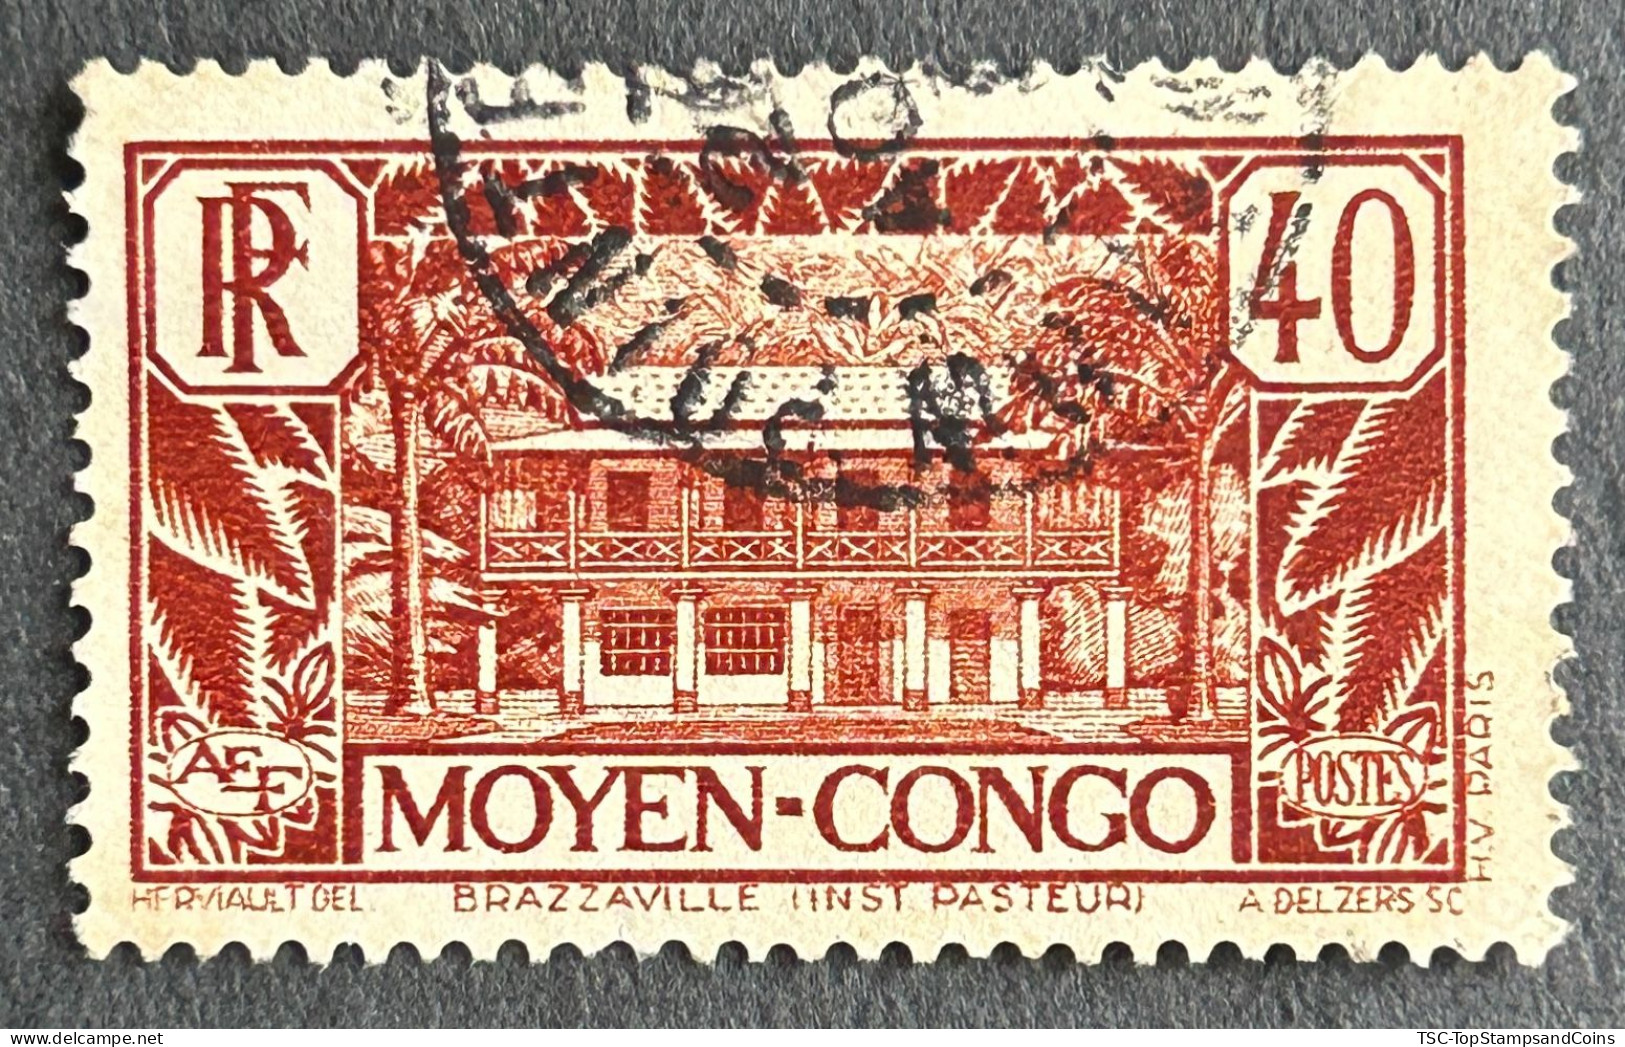 FRCG122U - Brazzaville - Pasteur Institute - 40 C Used Stamp - Middle Congo - 1933 - Oblitérés